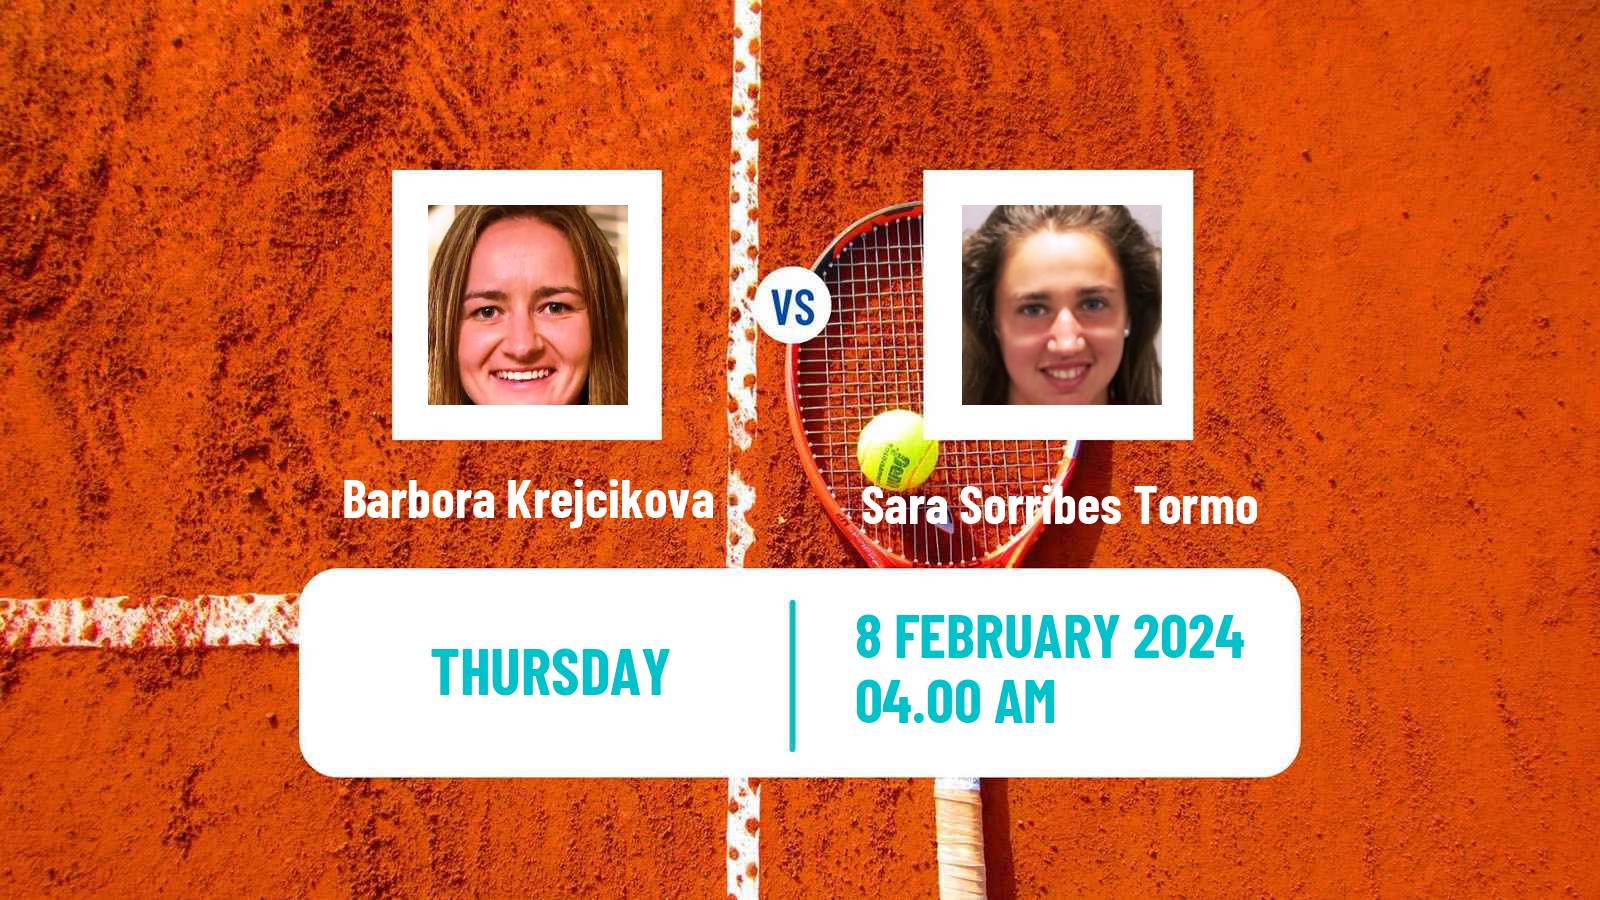 Tennis WTA Abu Dhabi Barbora Krejcikova - Sara Sorribes Tormo